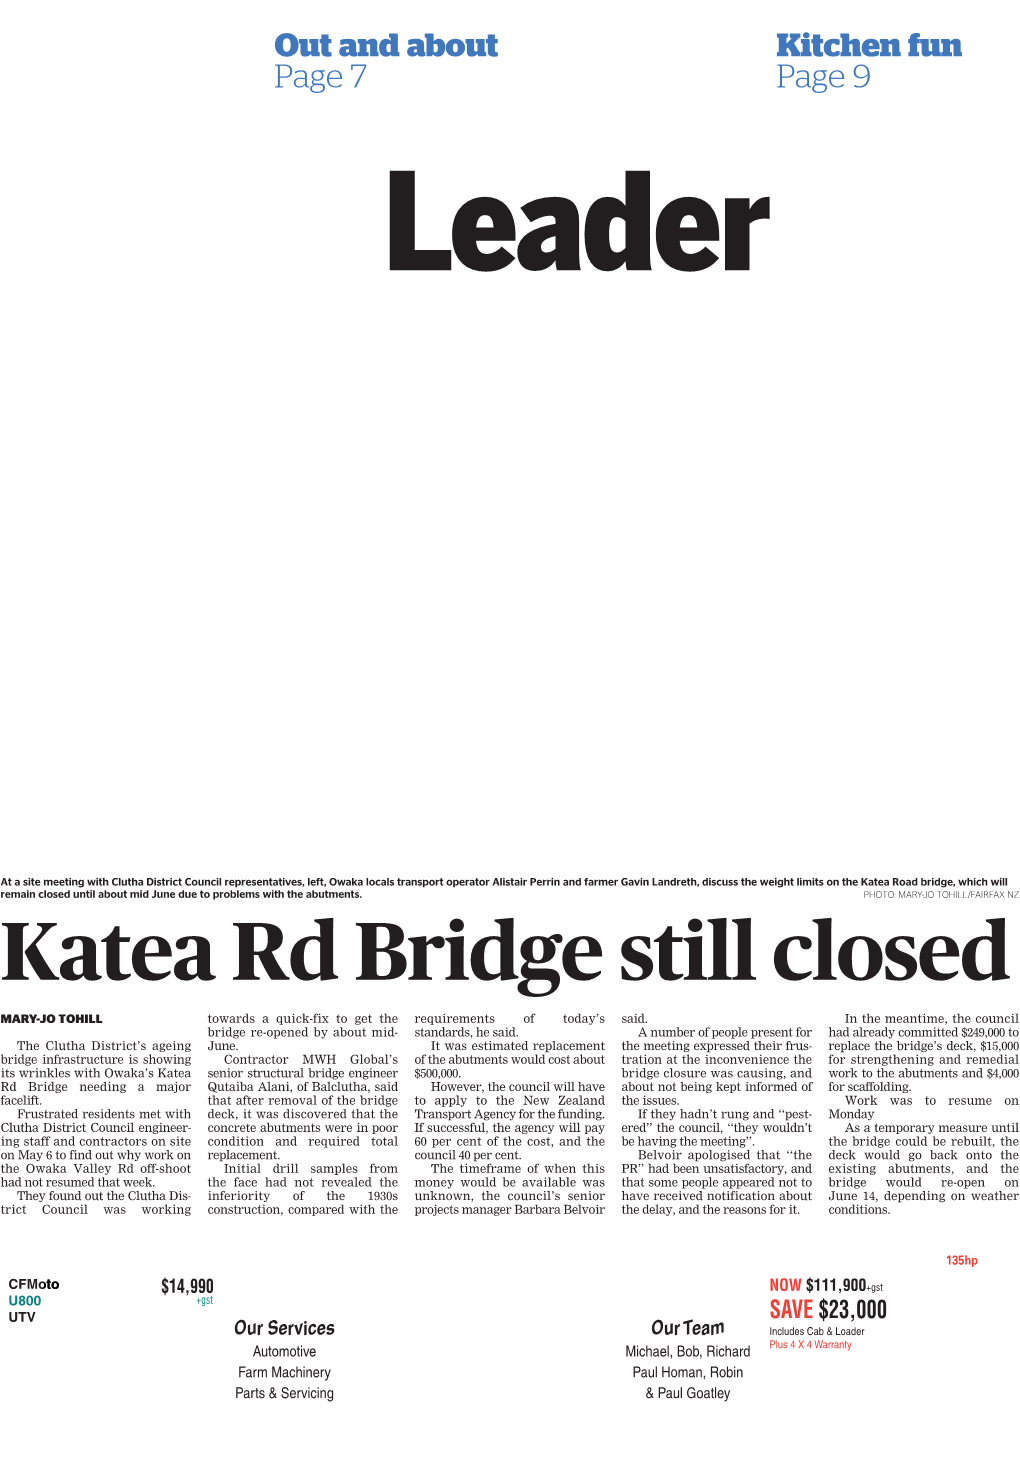 Katea Rd Bridge Still Closed